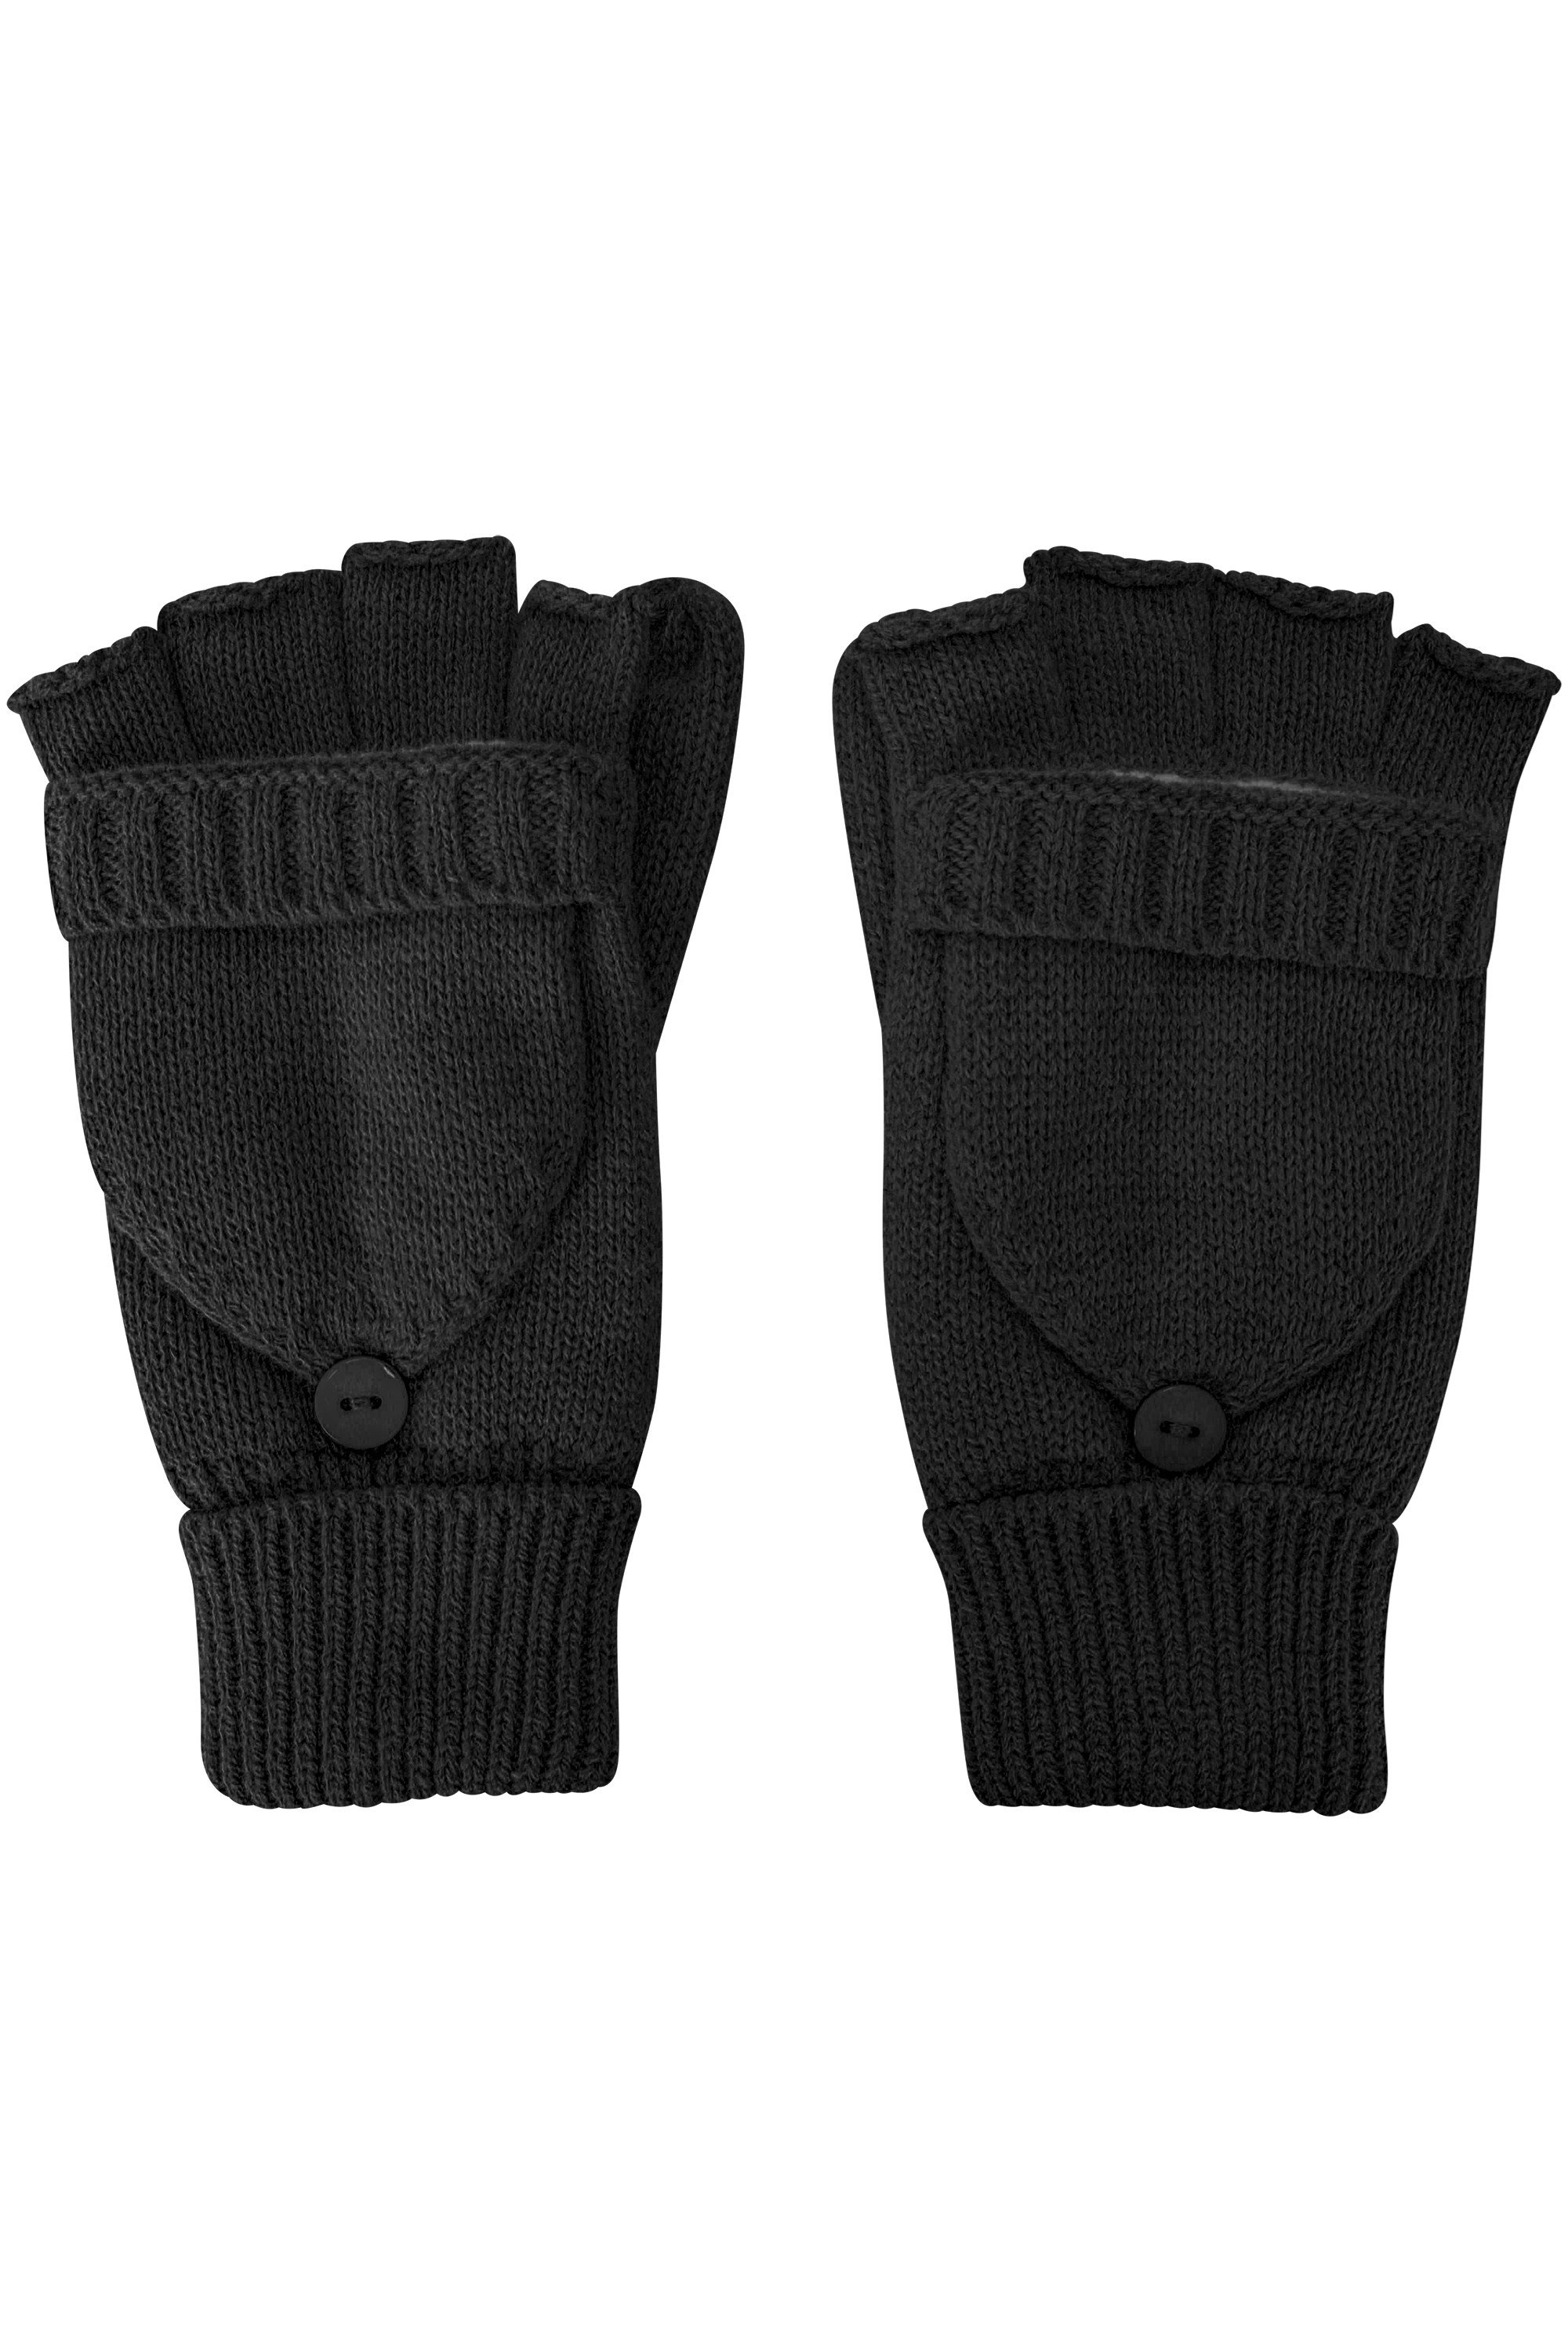 atmungsaktiv Mountain Warehouse Extreme wasserdichte Damen-Handschuhe 